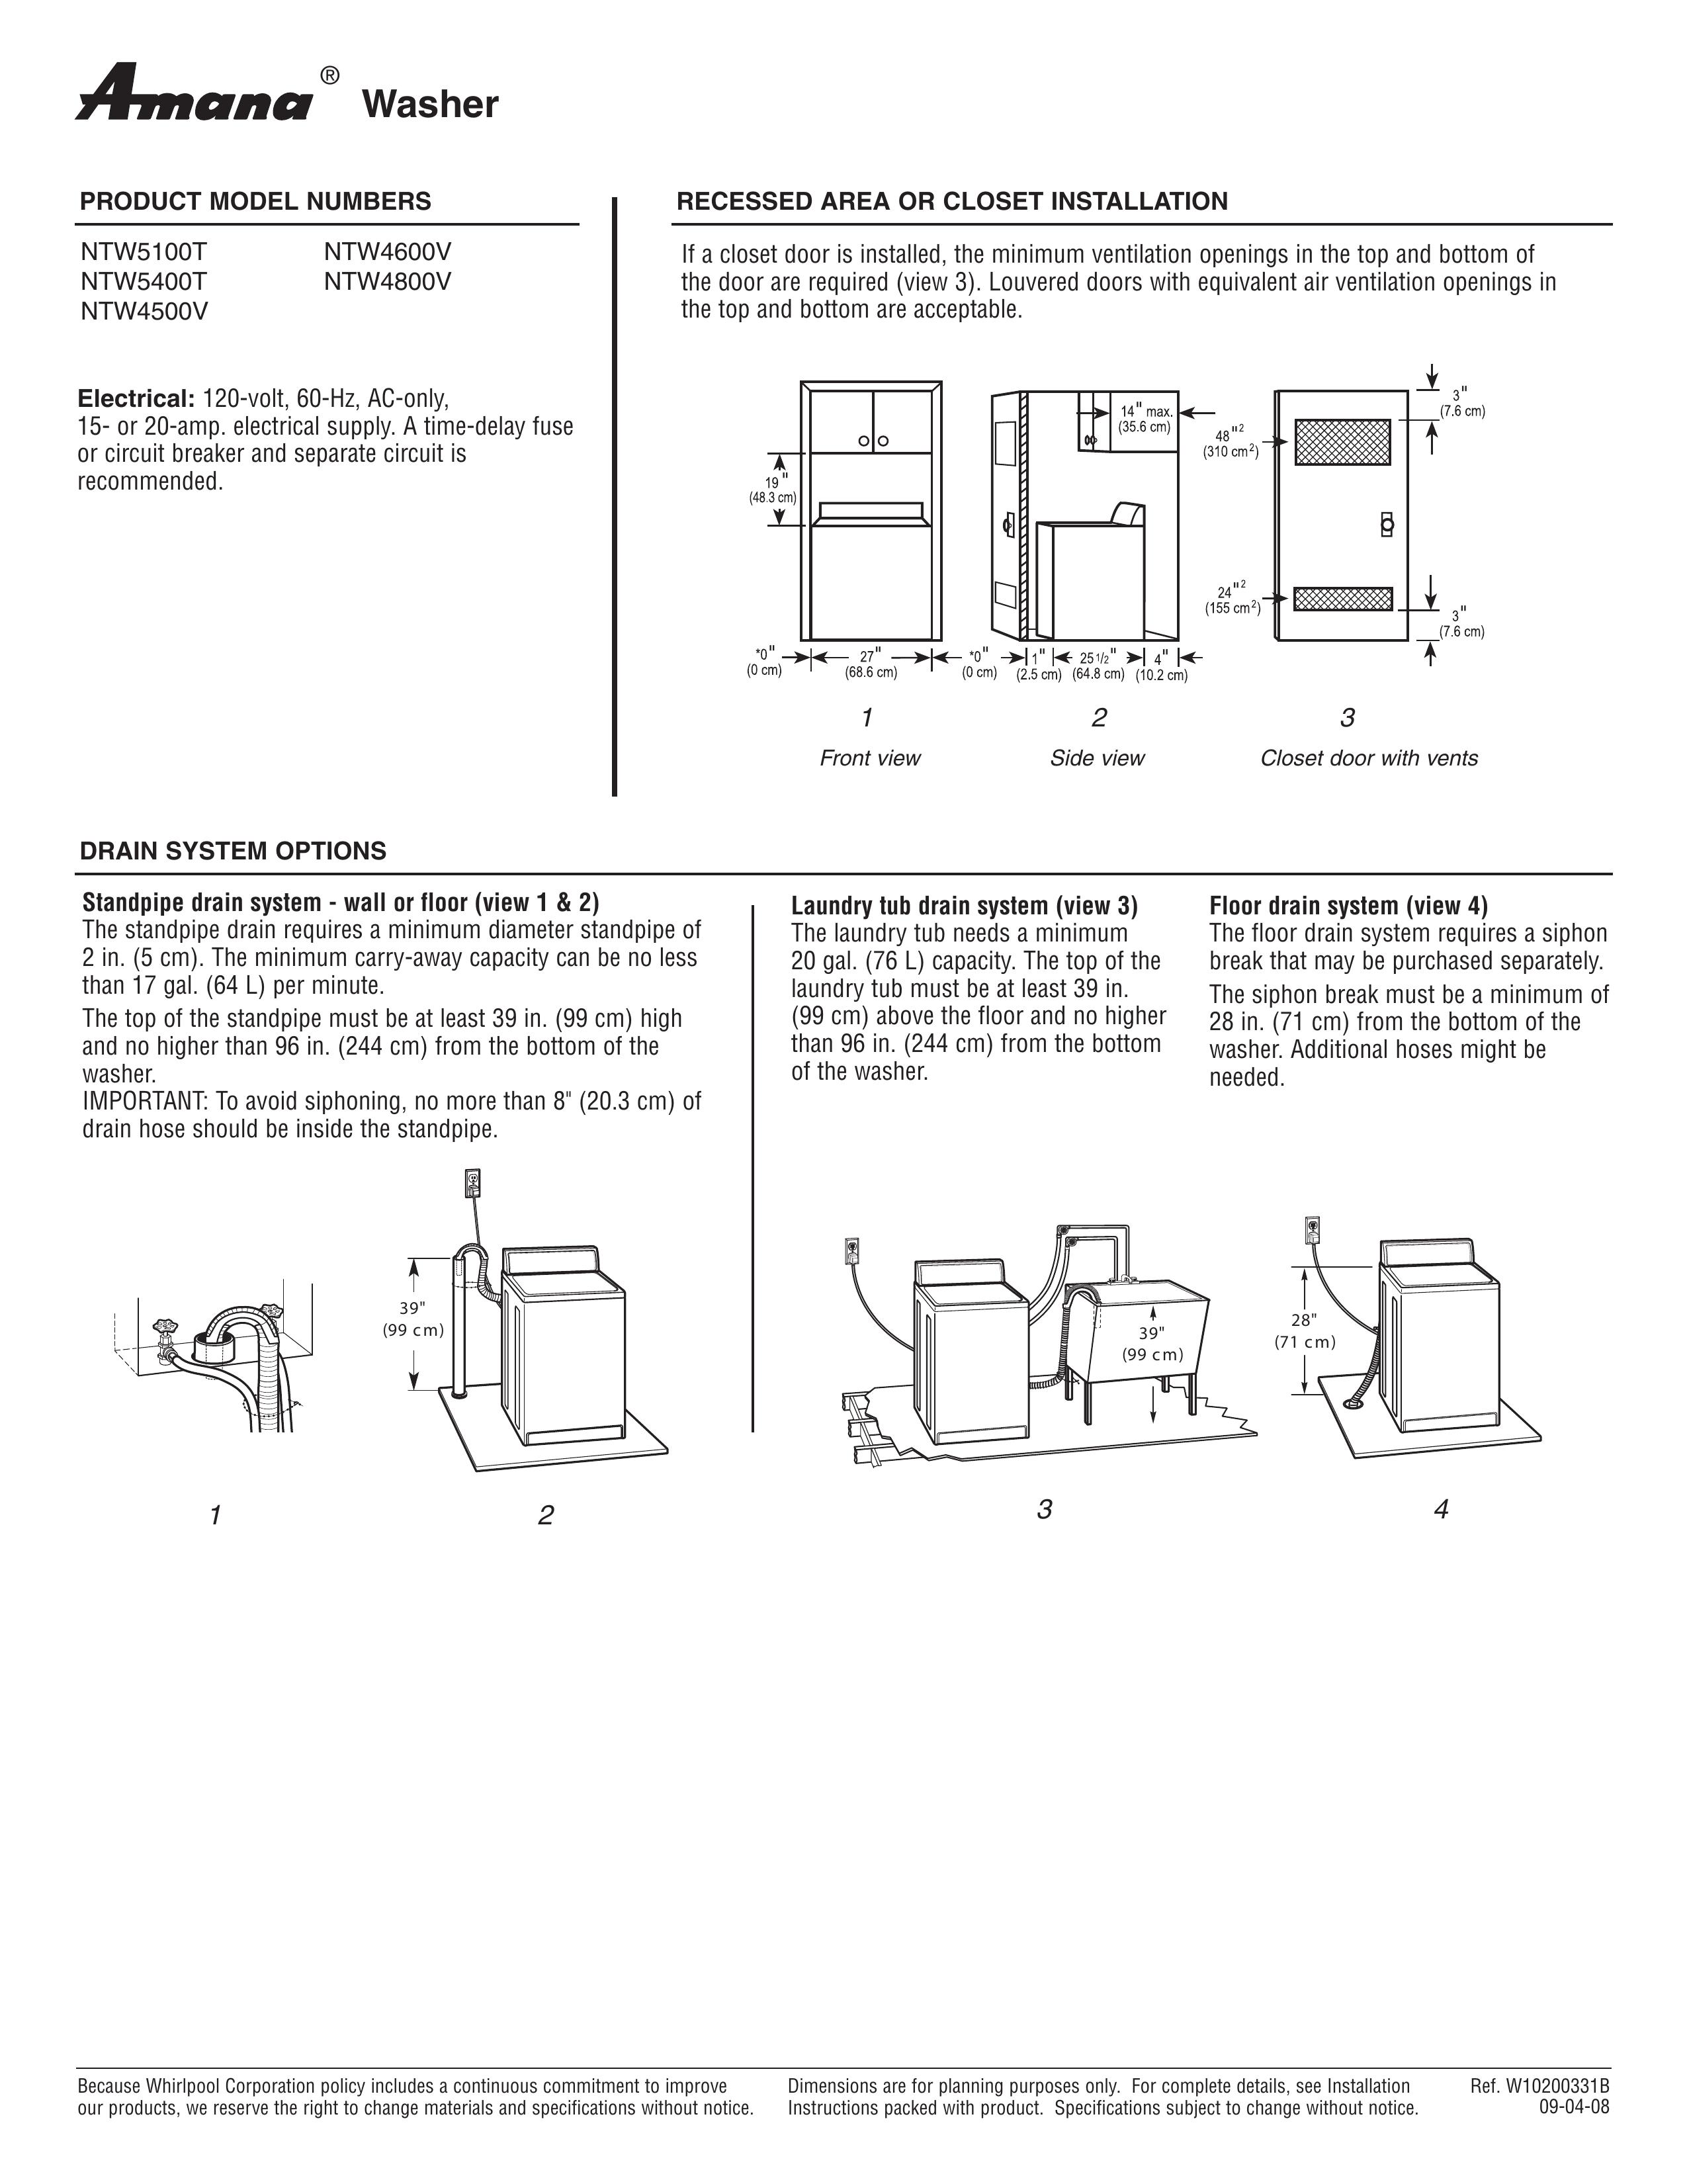 Amana NTW4500V Washer User Manual